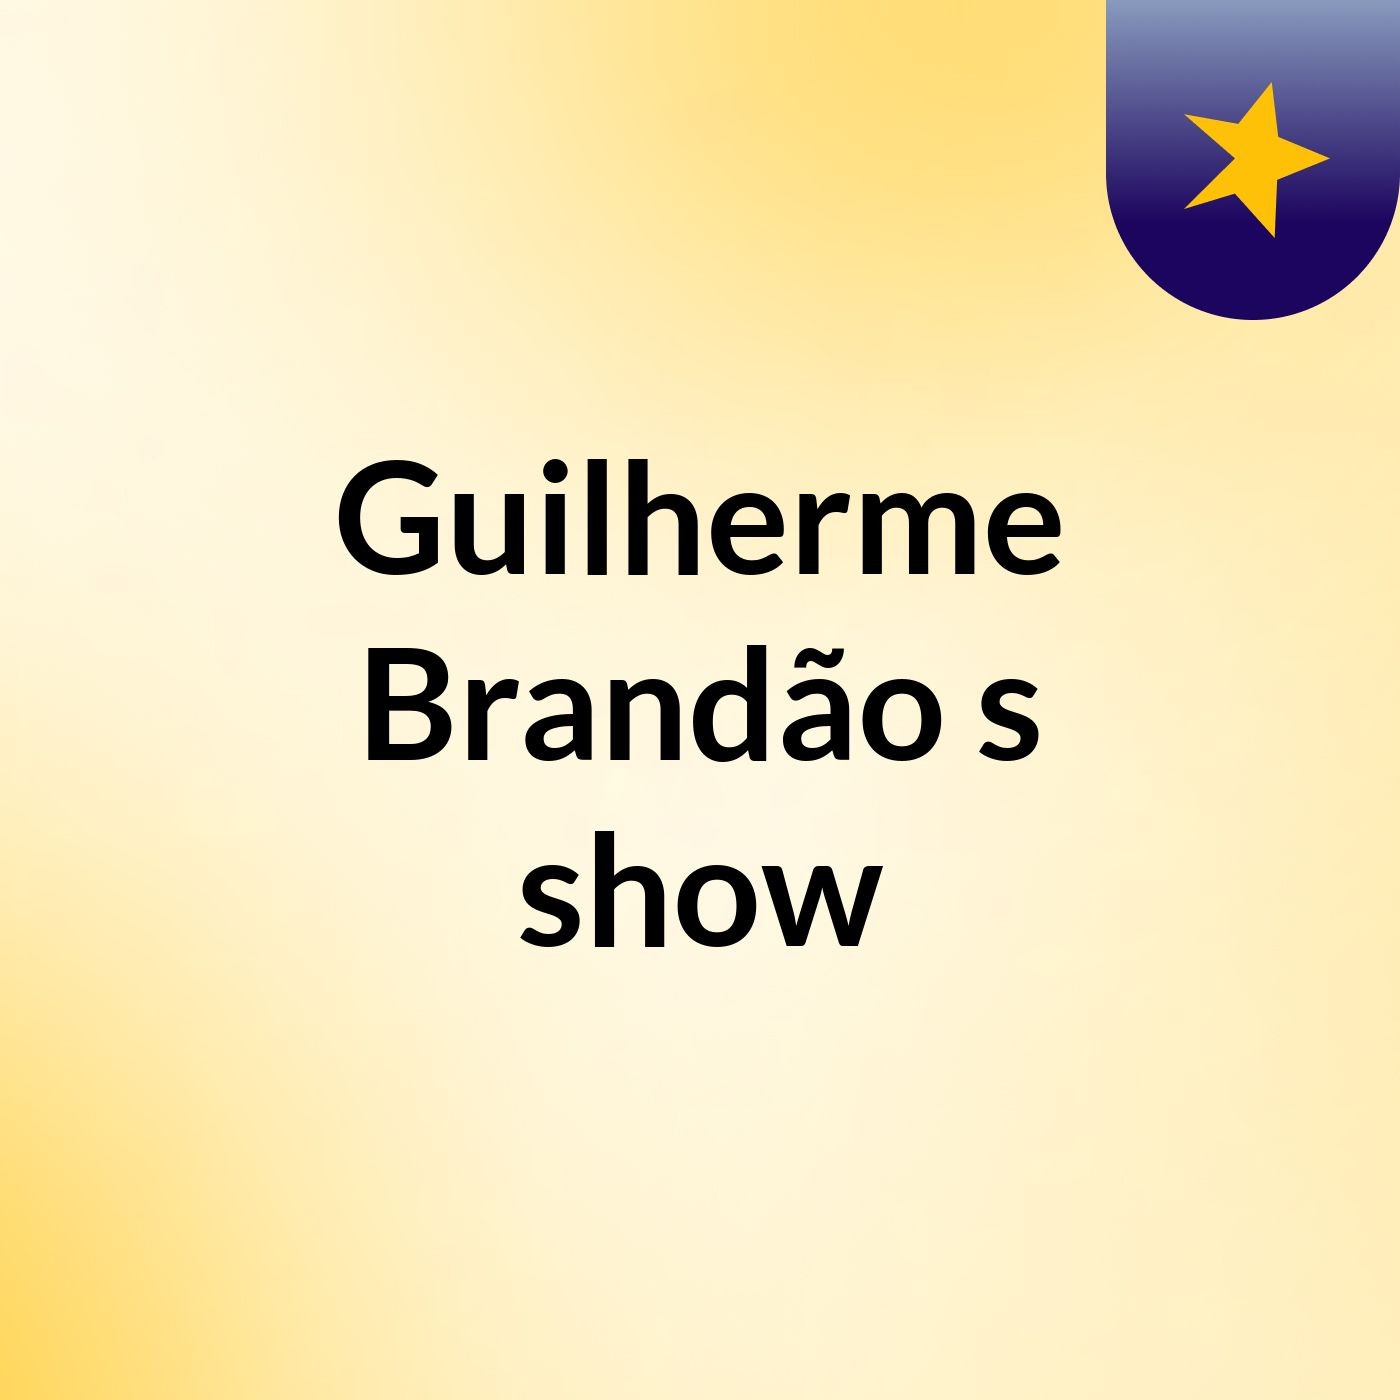 Guilherme Brandão's show